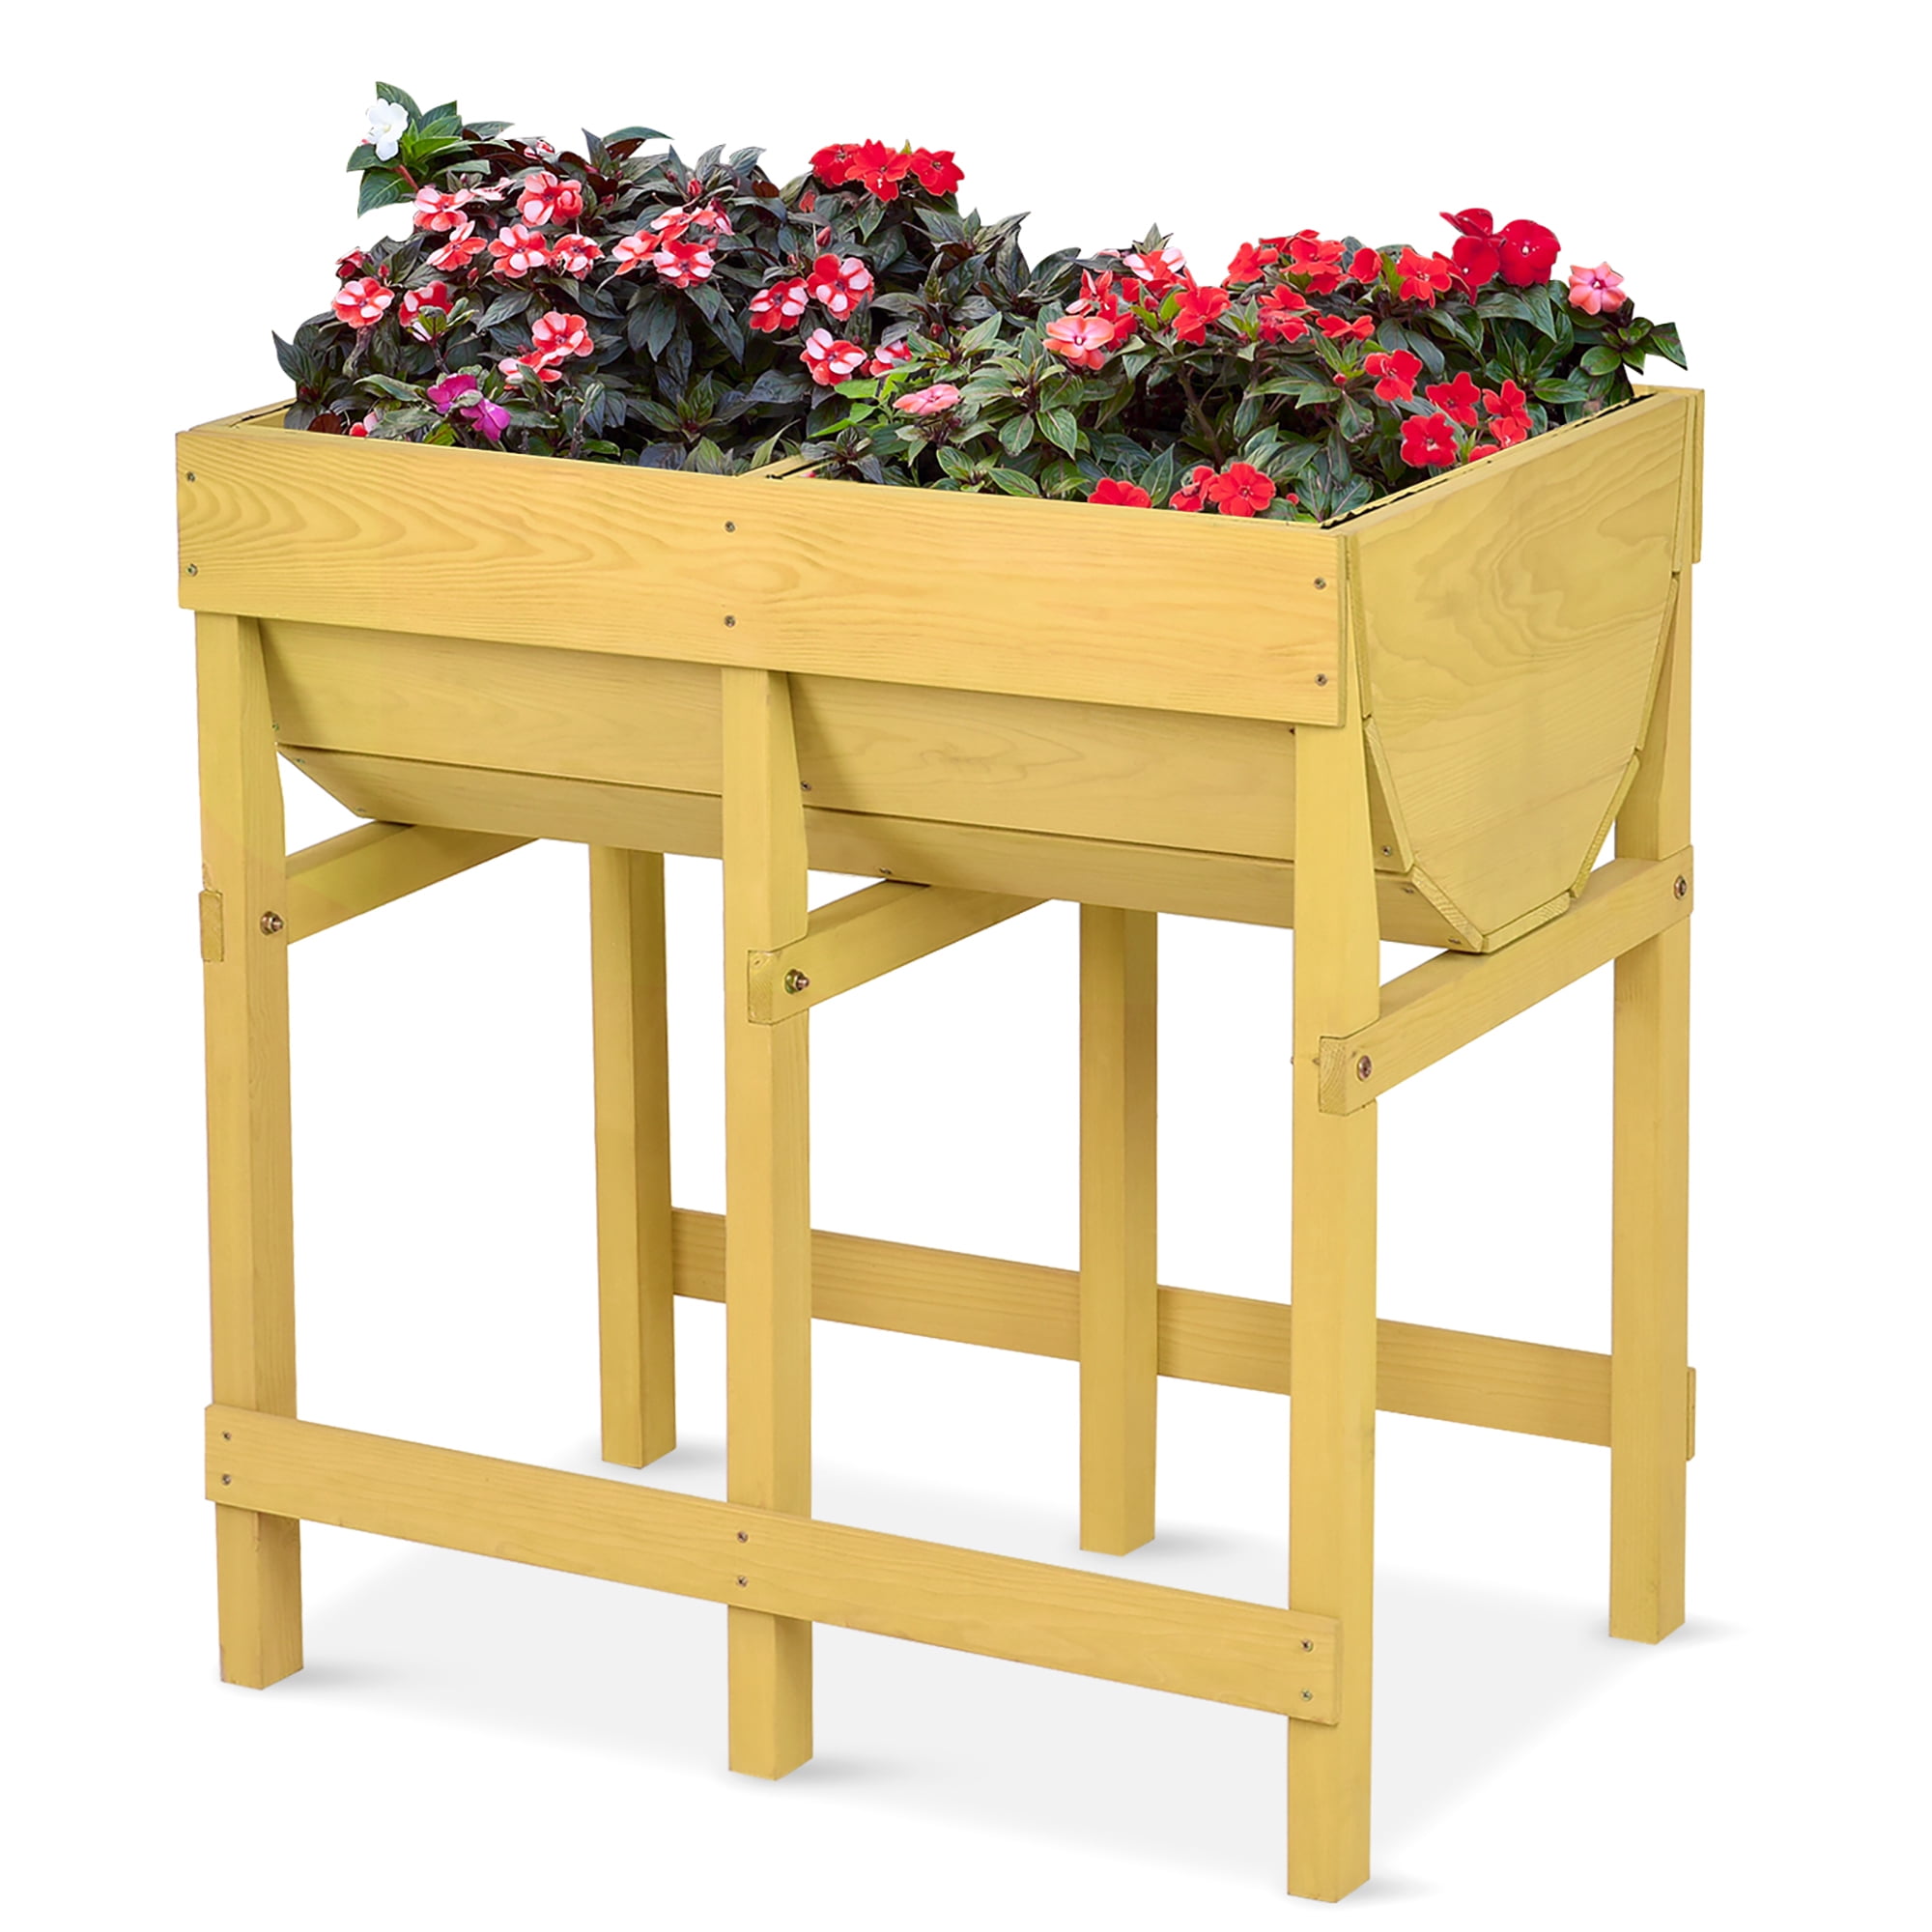 Wooden Raised V Planter Elevated Vegetable Flower Bed Planting Standing for sale online 